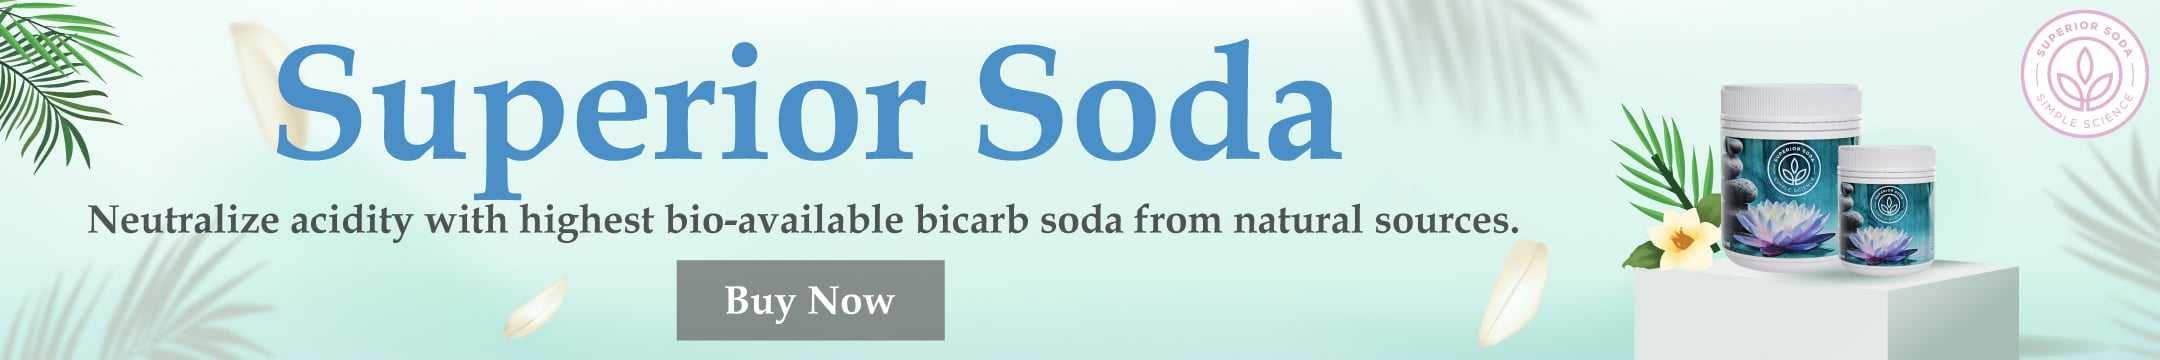 Superior Soda Banner Ad 2